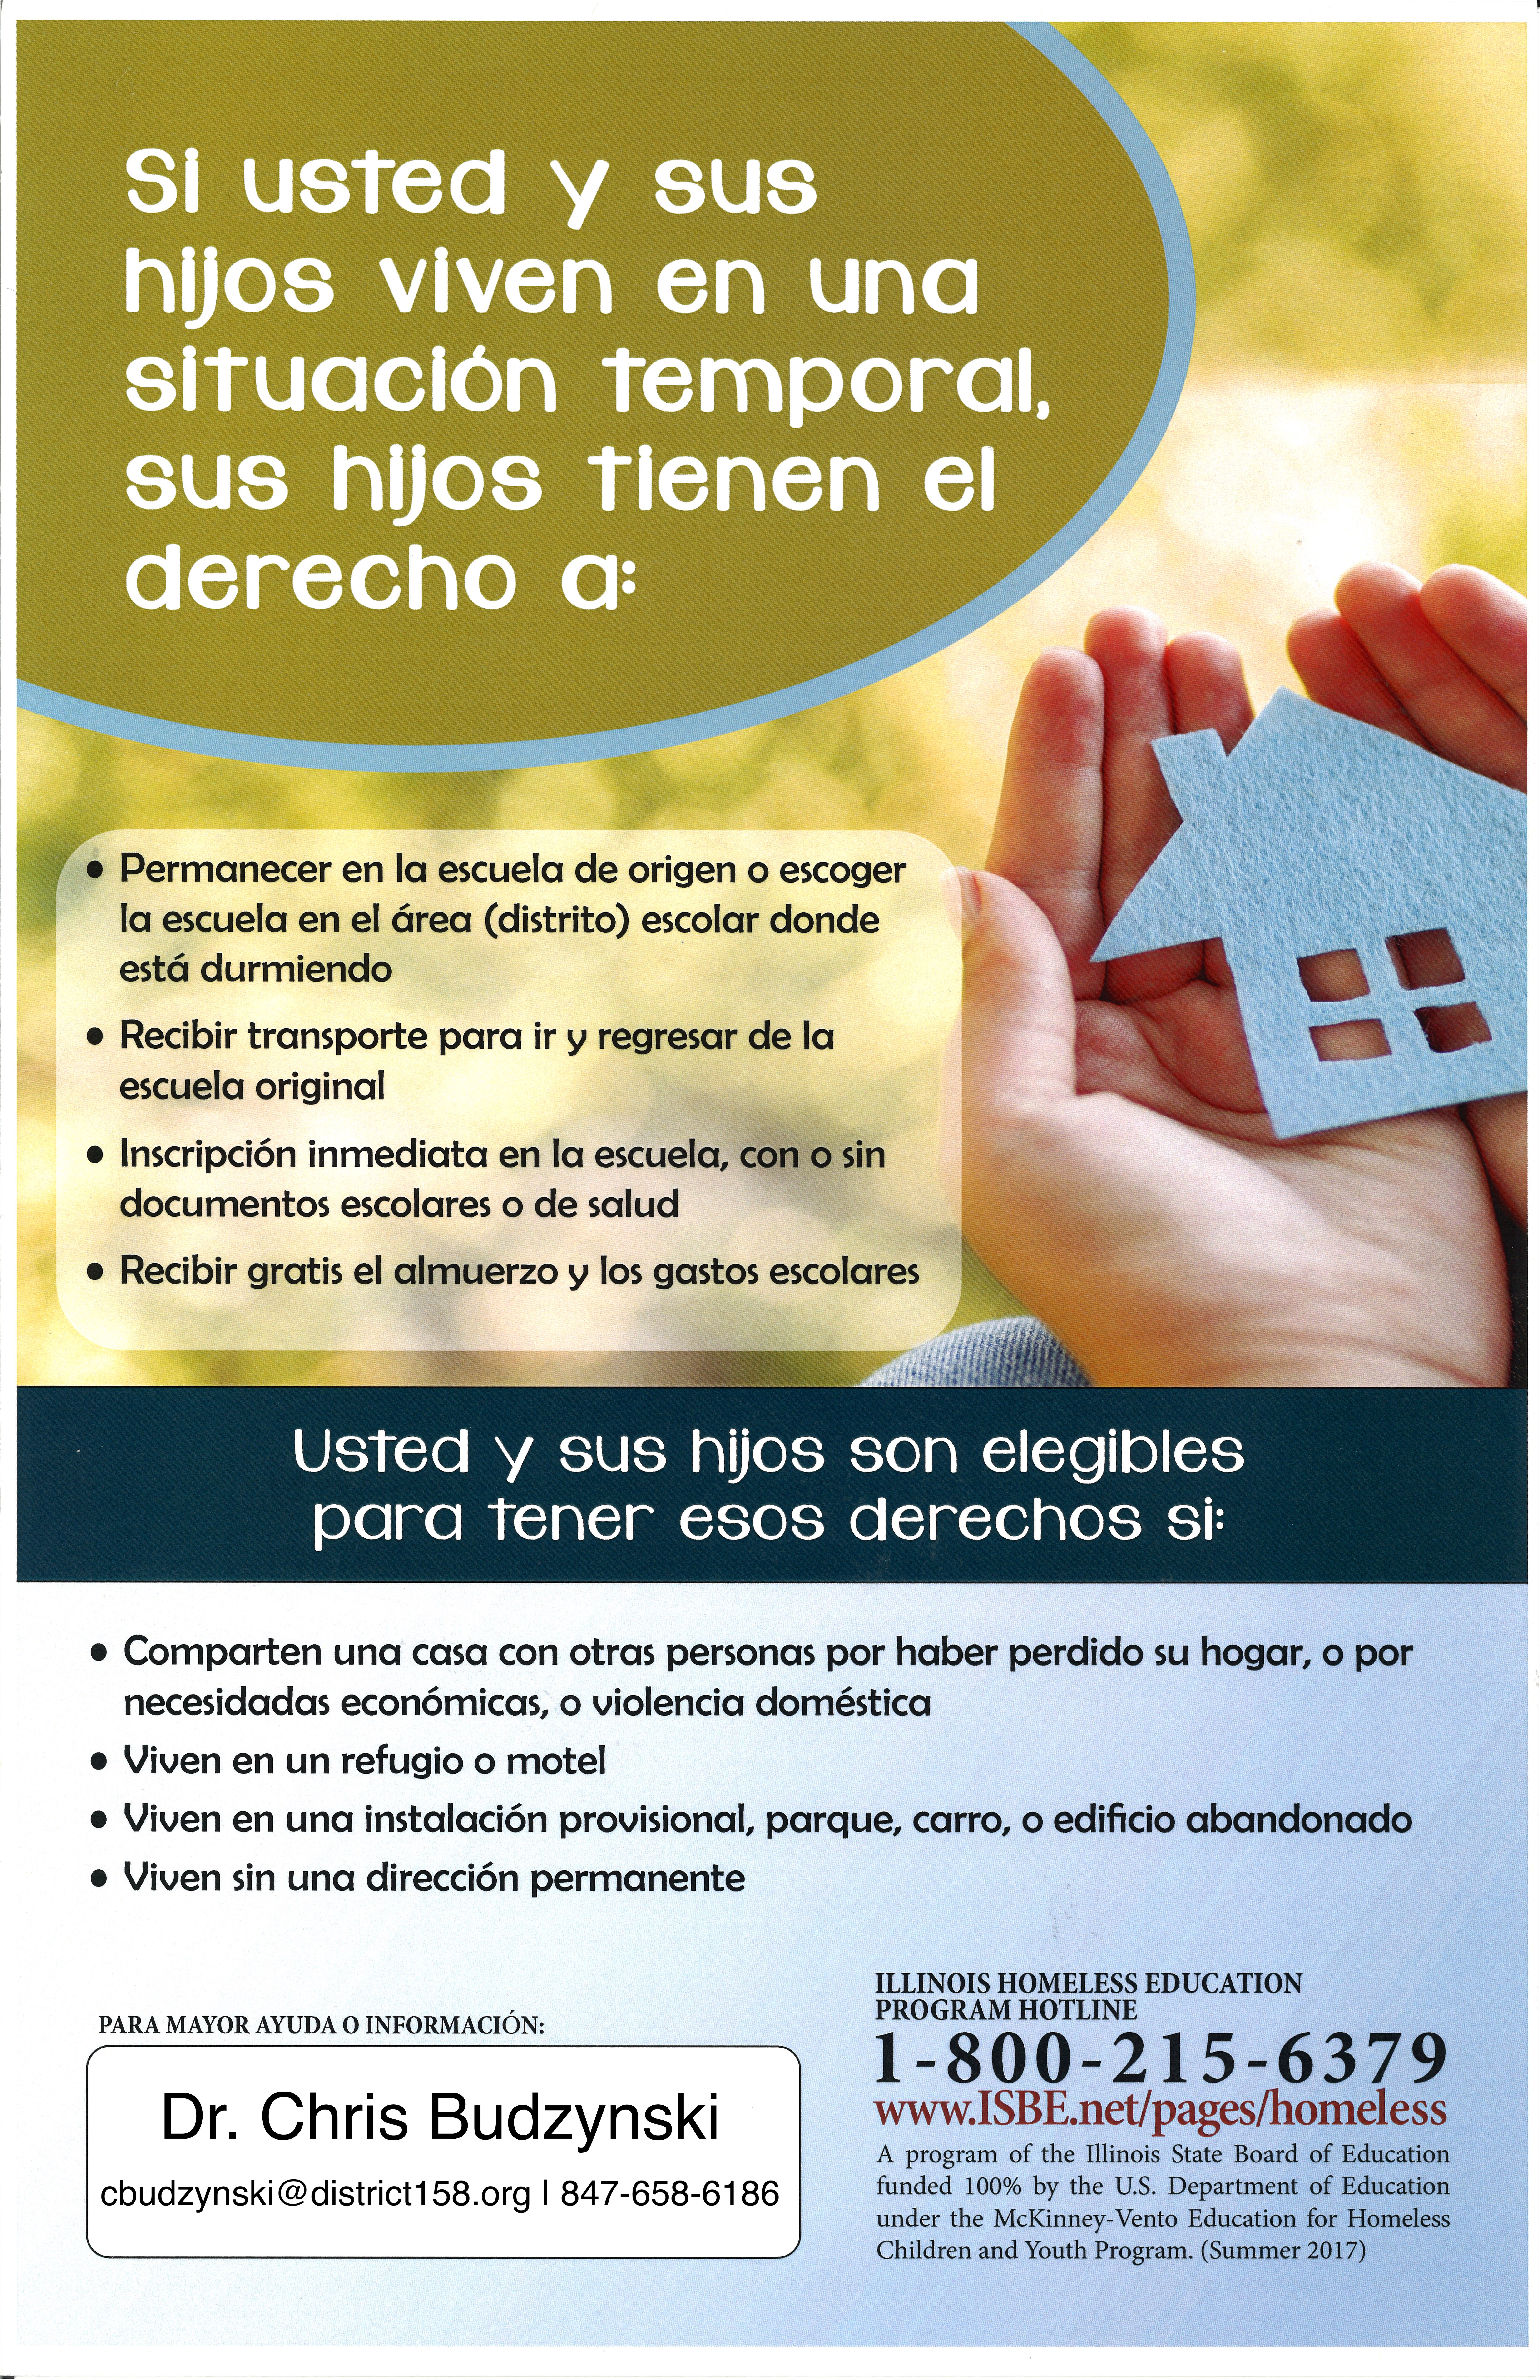 Homeless information - Spanish